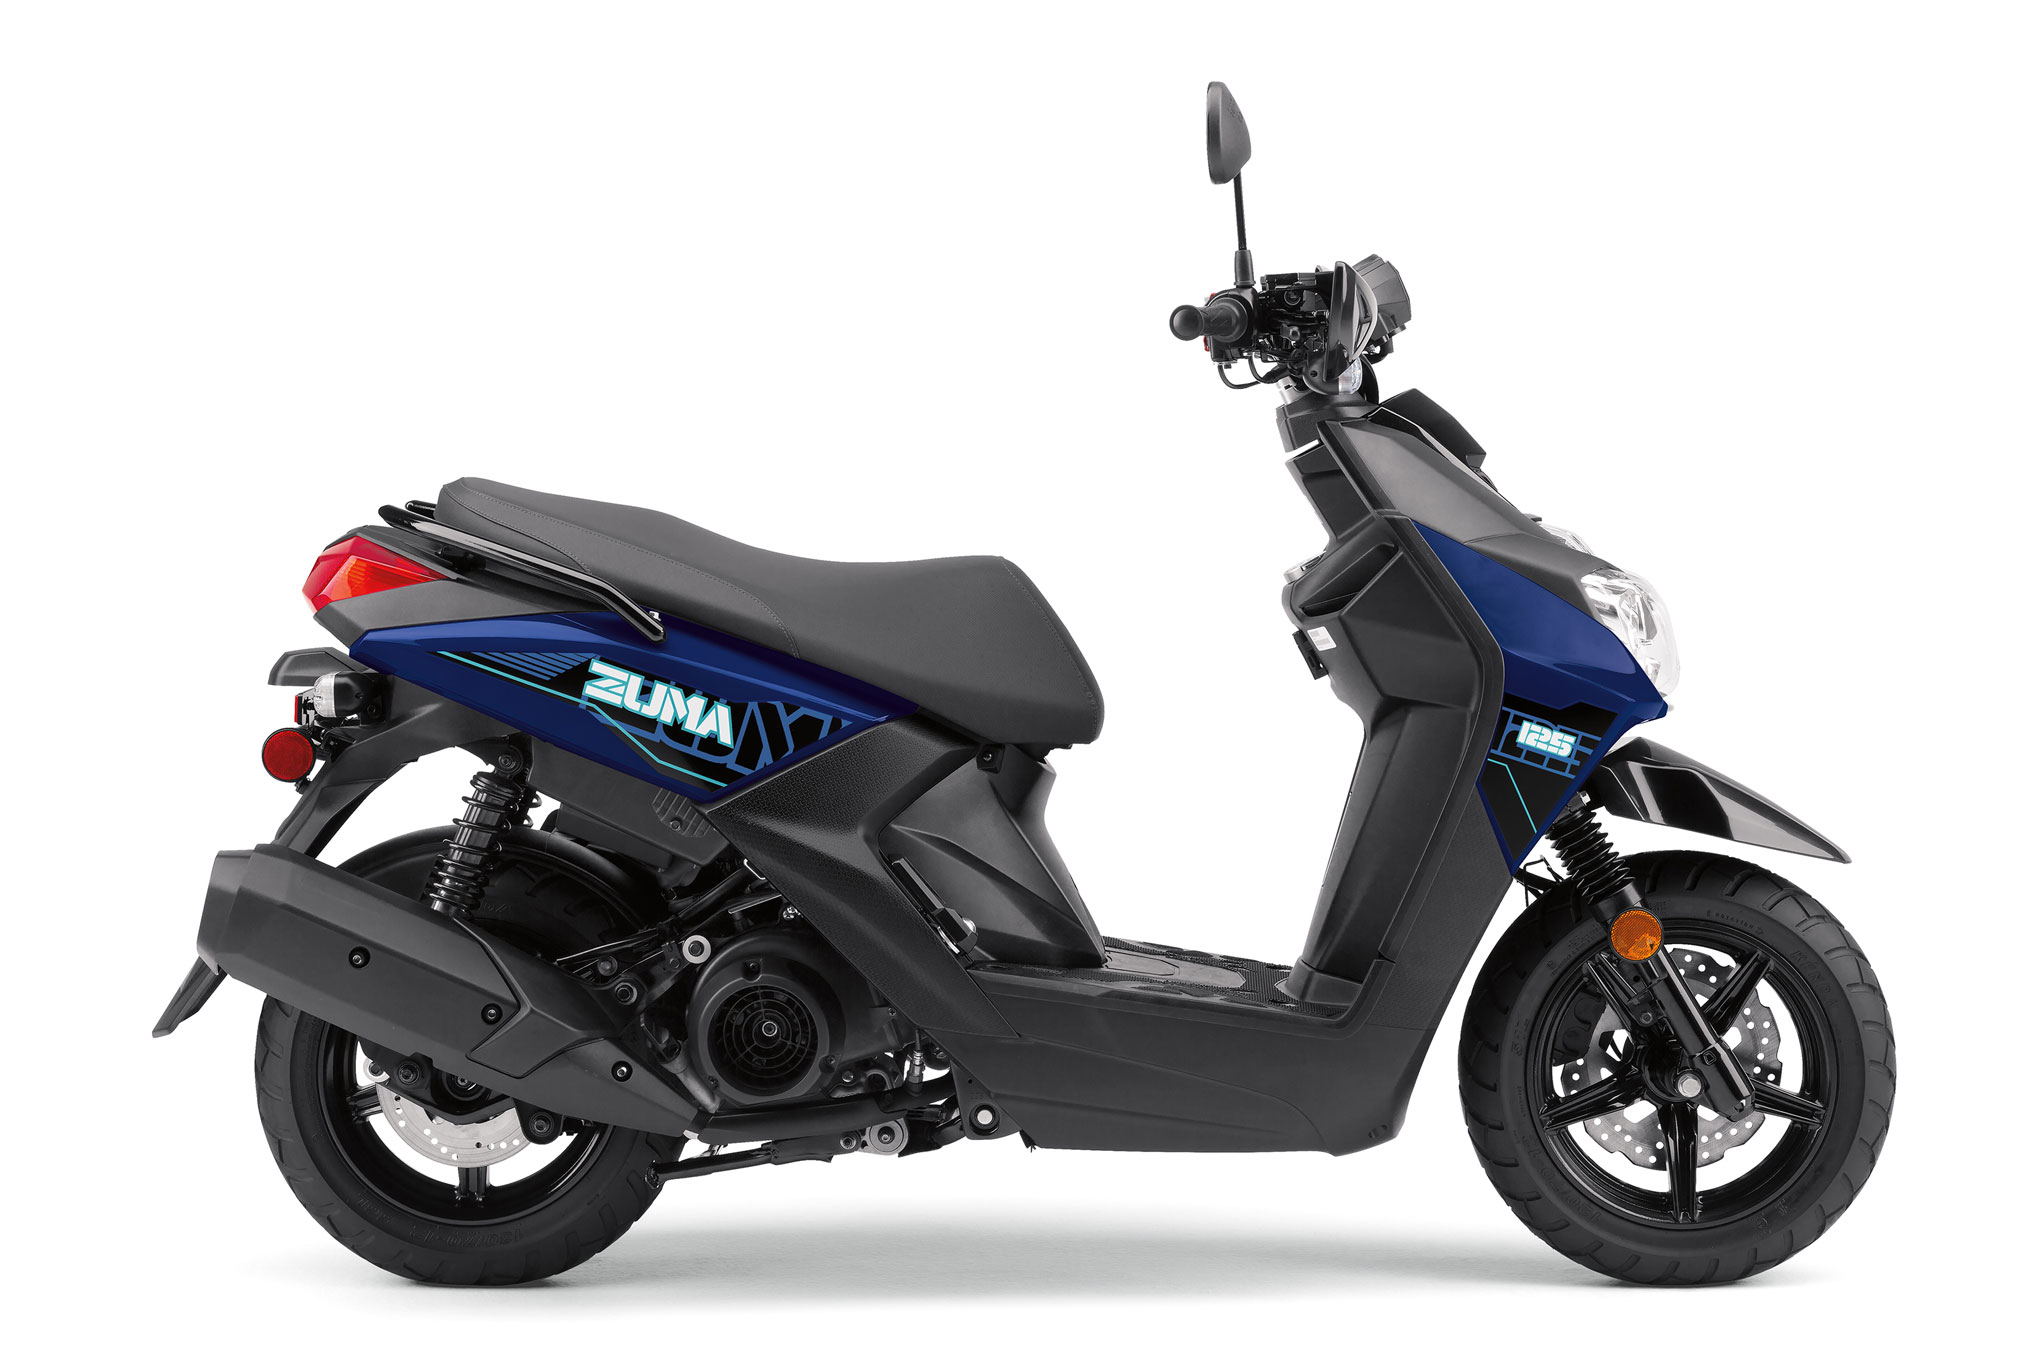 2019 Yamaha Zuma 125 Guide • Total Motorcycle